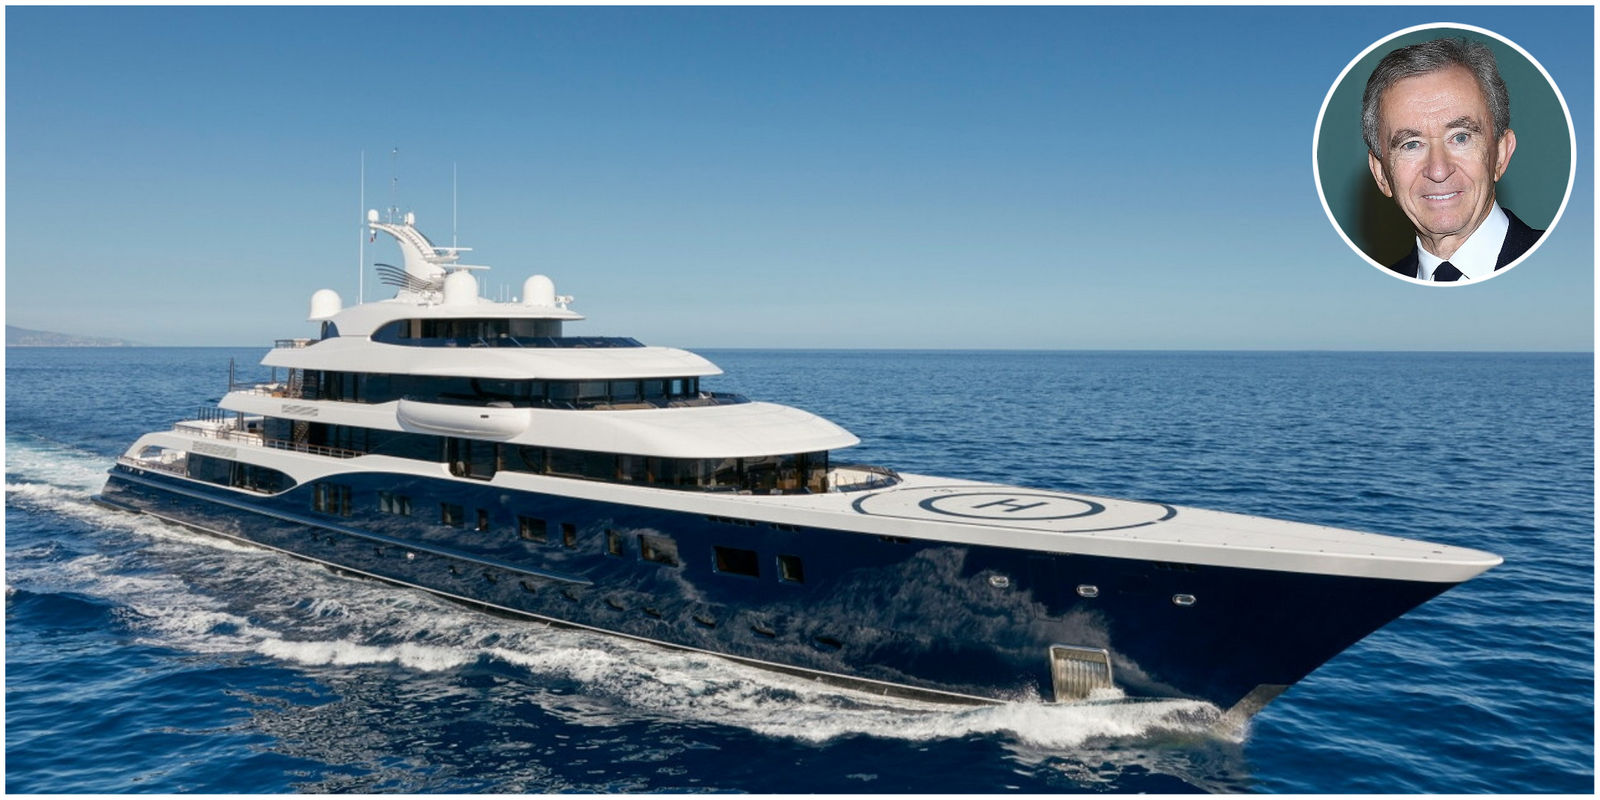 LVMH CEO Bernard Arnault's $150 million superyacht was denied